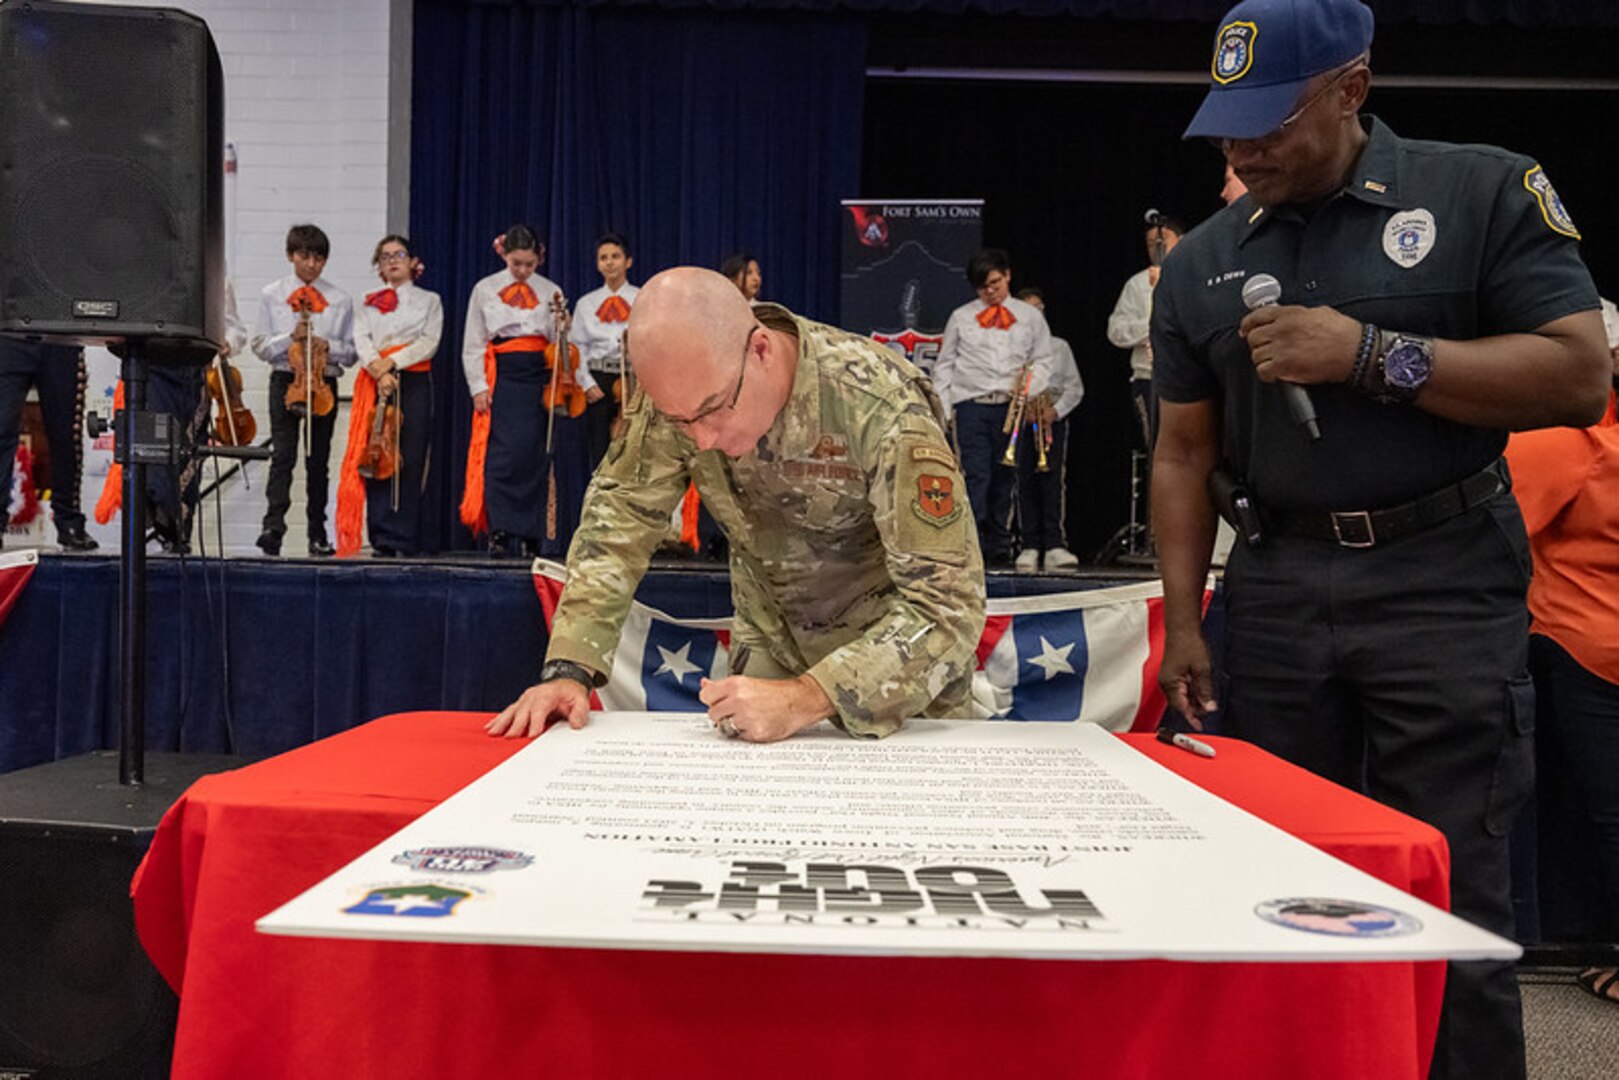 Military member signing poster.